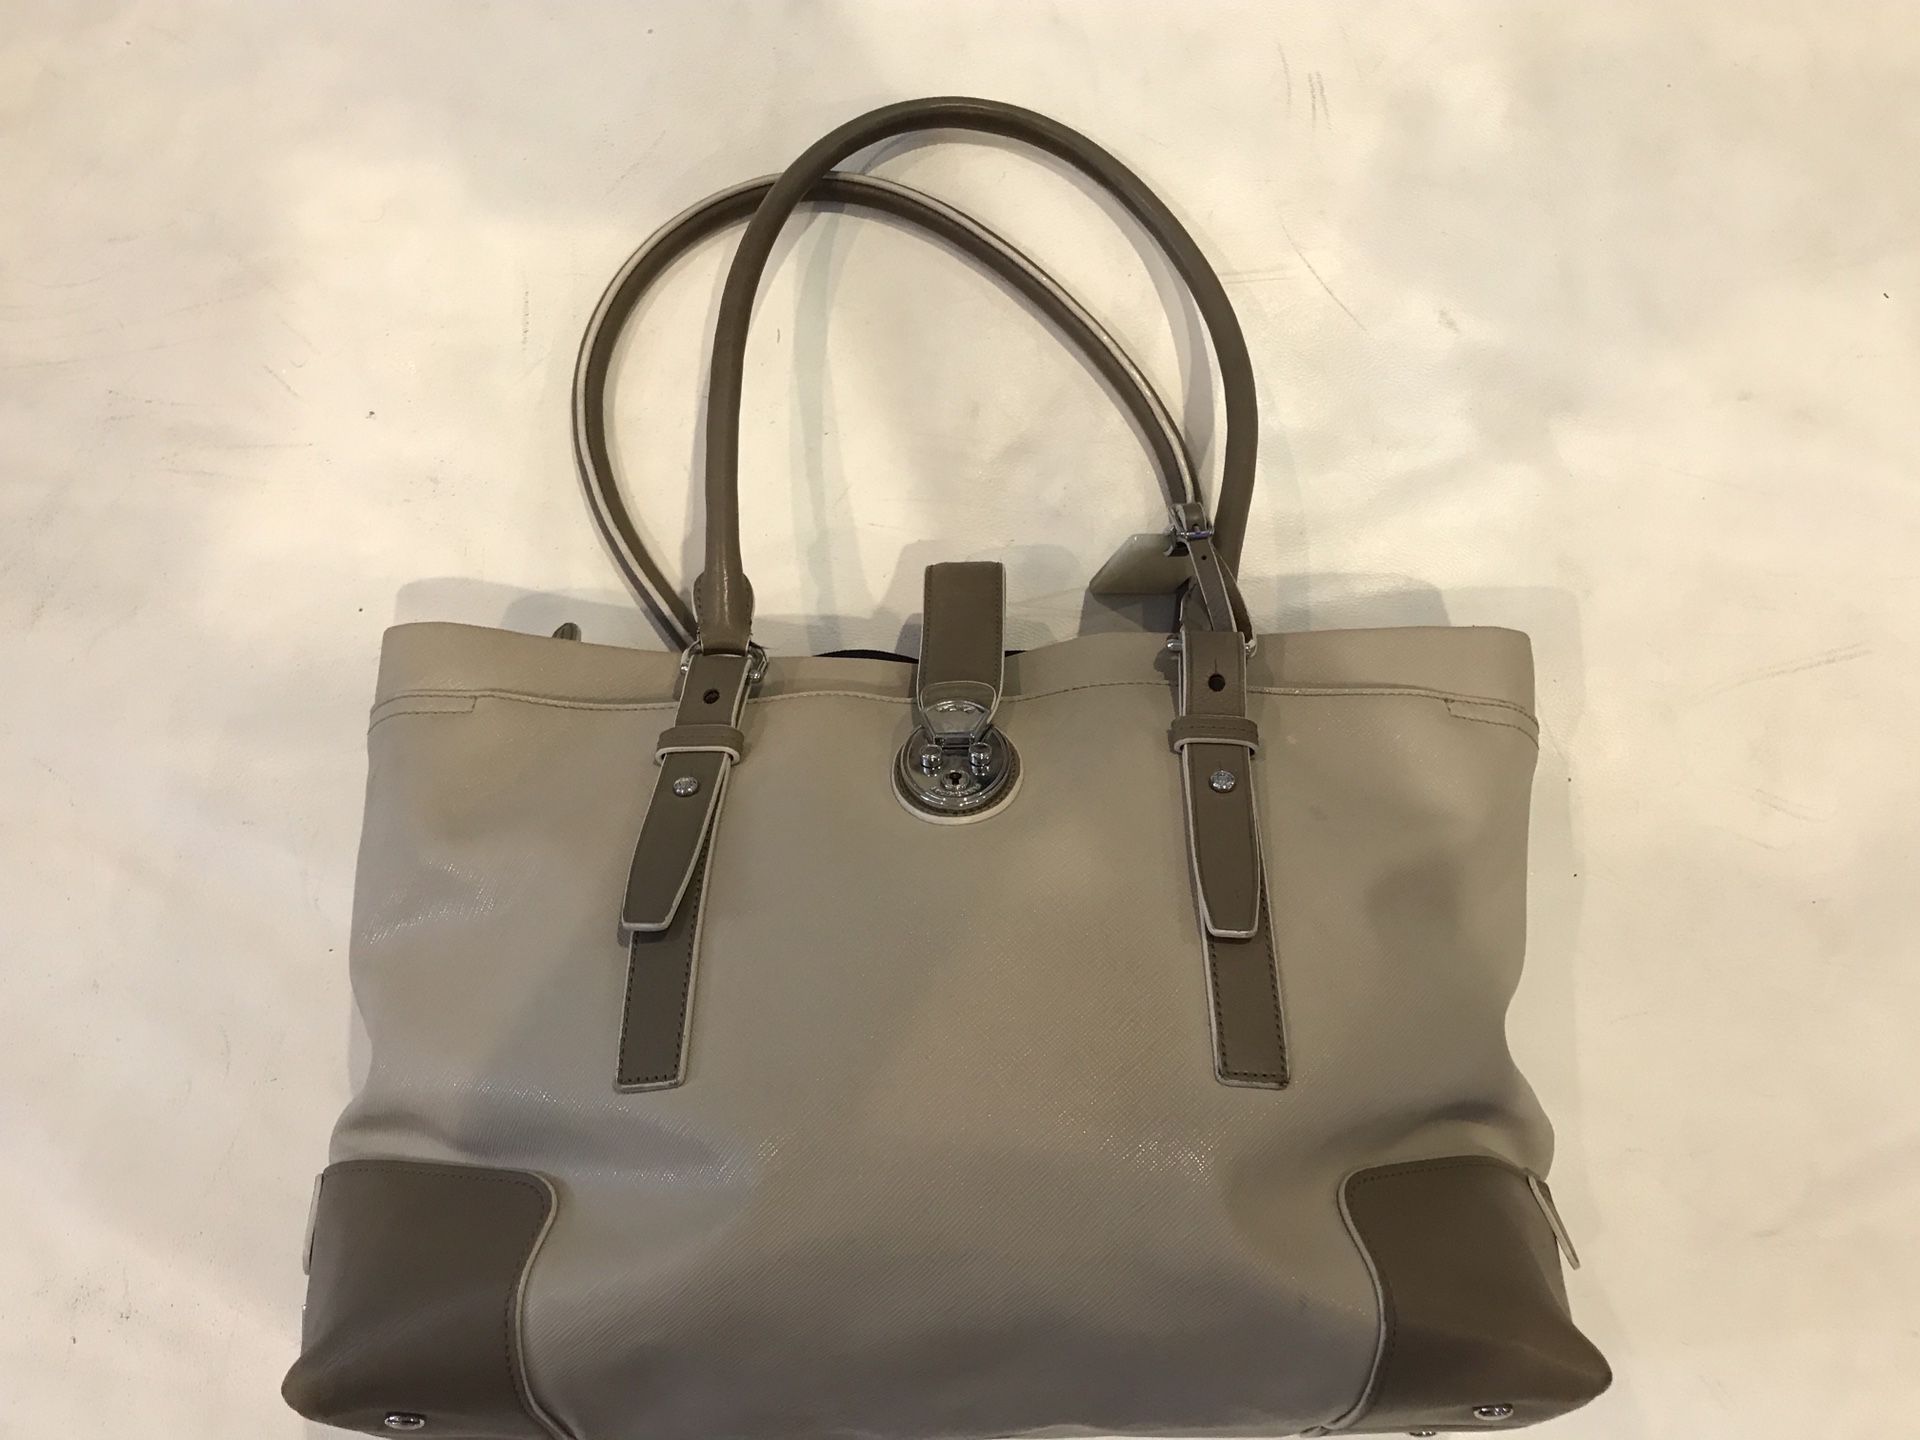 Tumi purse with laptop bag